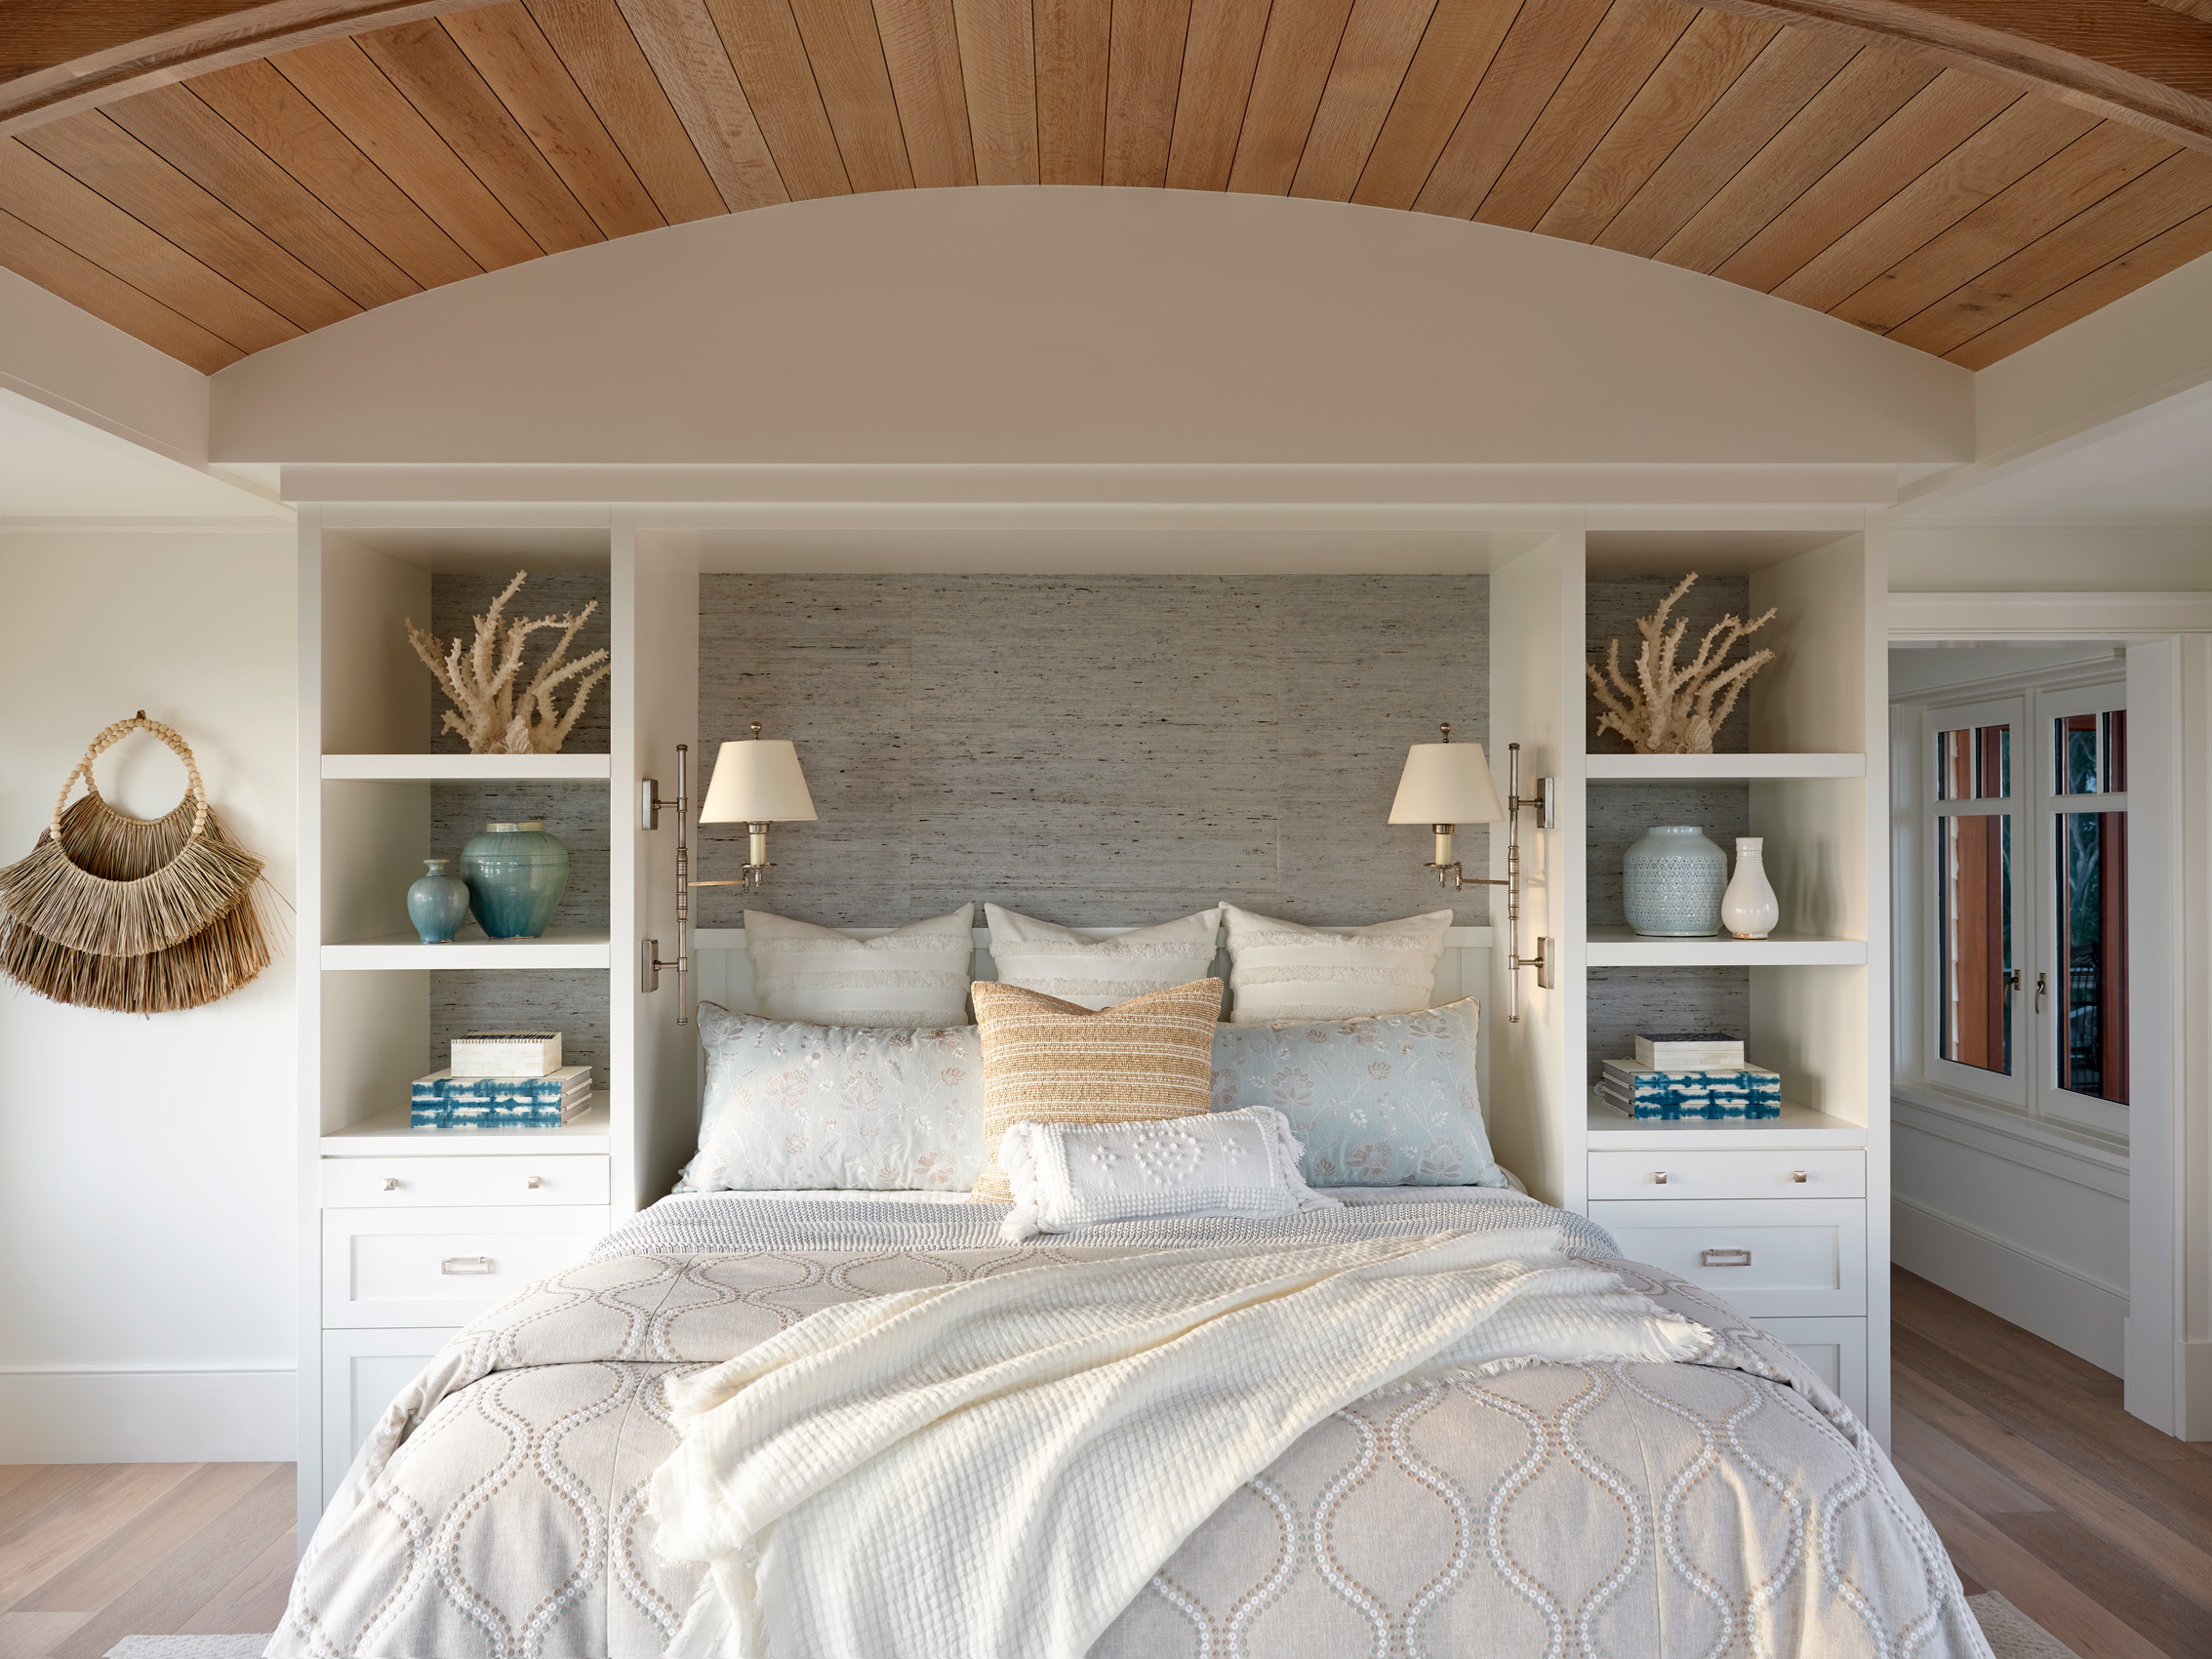 Renee Gaddis designed beach master bedroom photographed by Mali Azima.